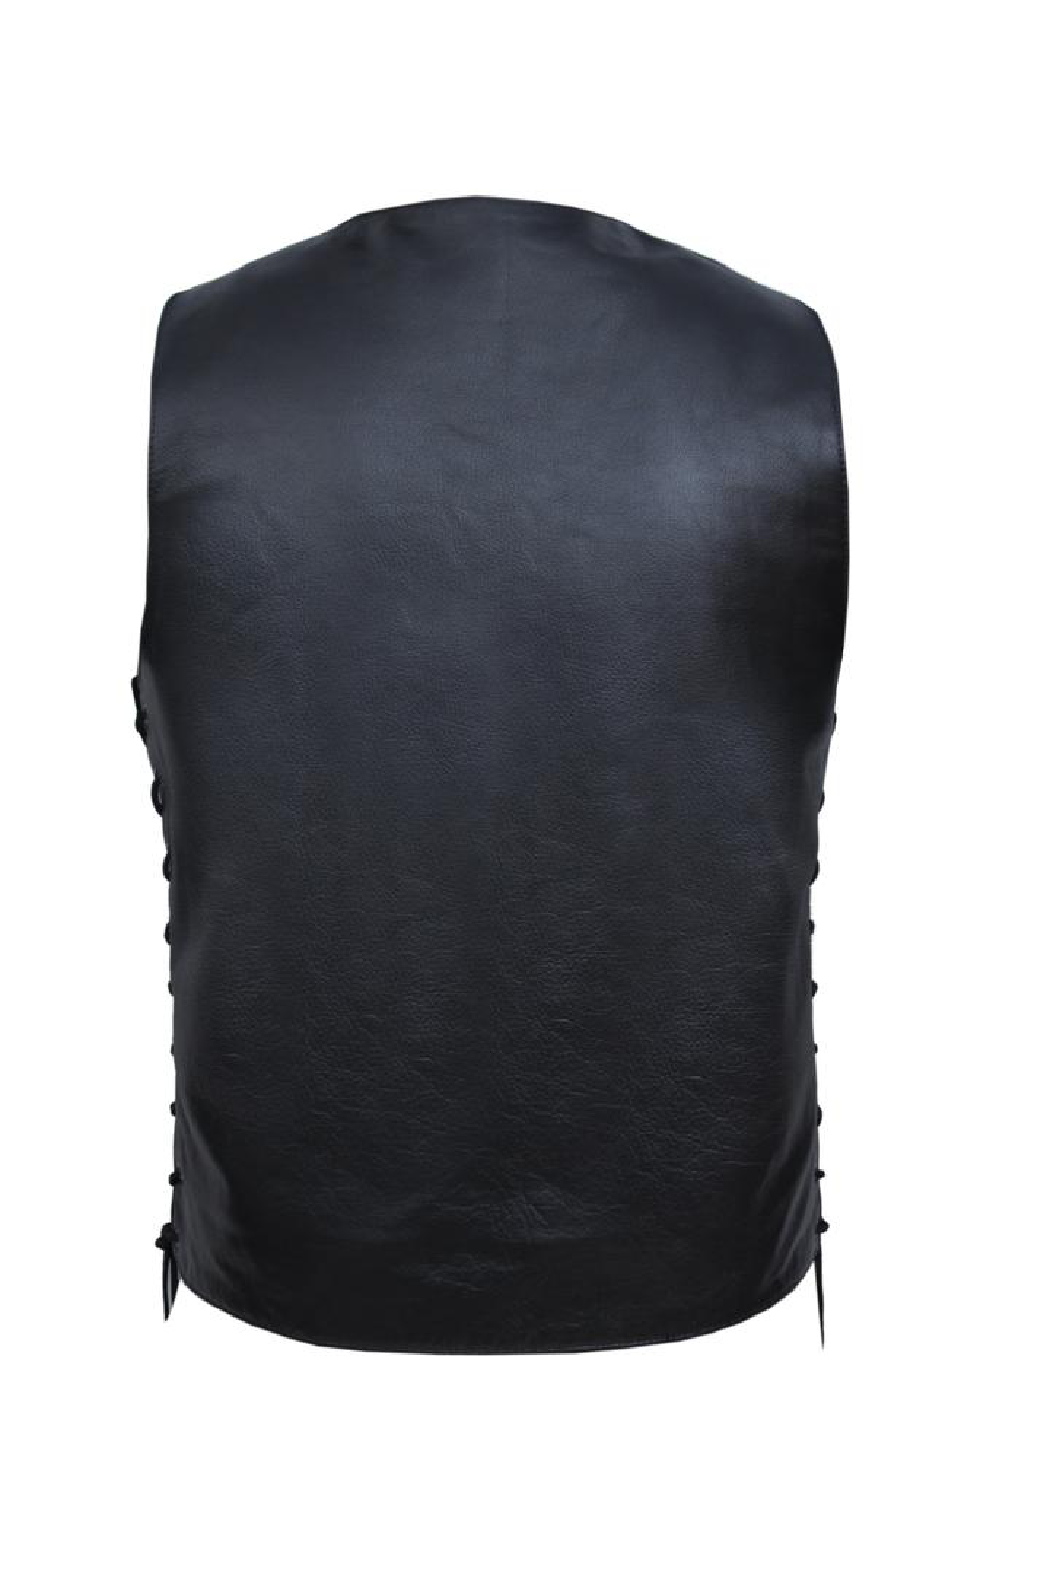 Unik 10 Pocket Leather Vest